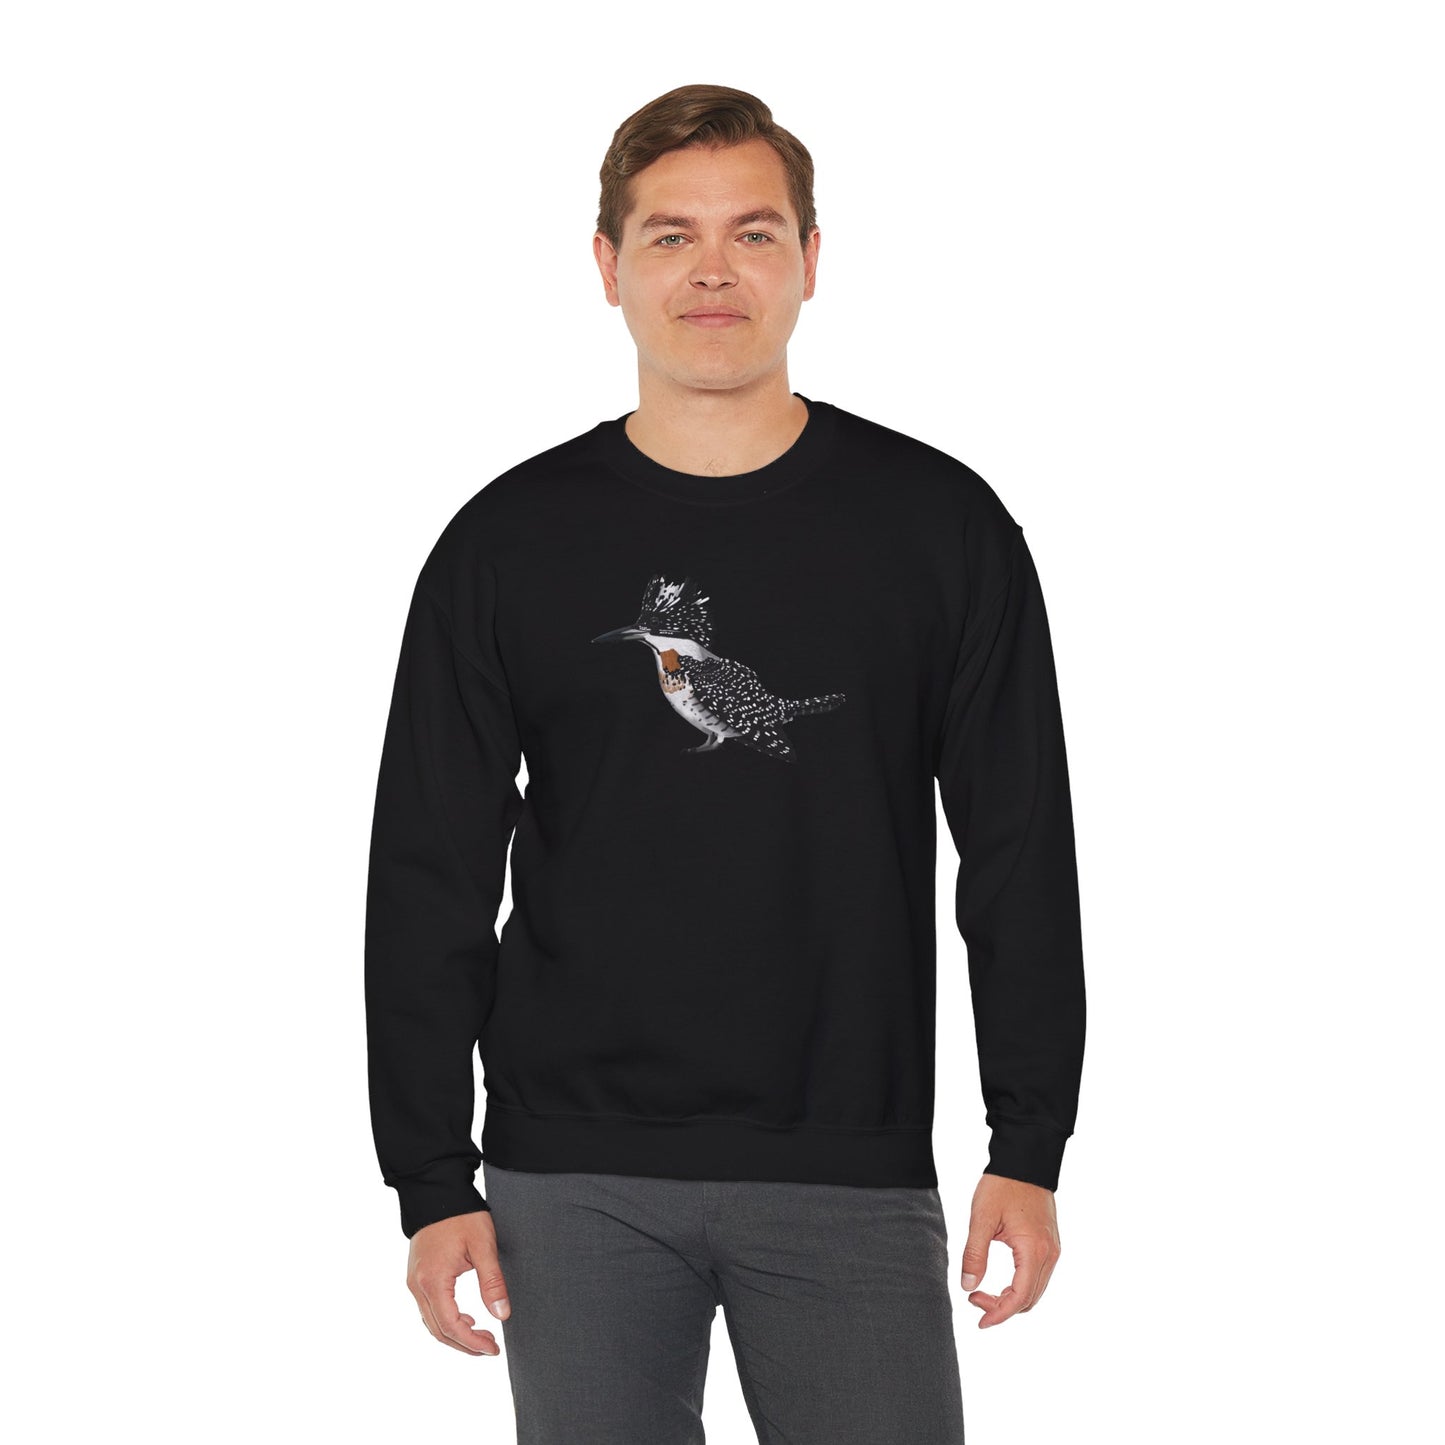 Crested Kingfisher Bird Watcher Biologist Crewneck Sweatshirt